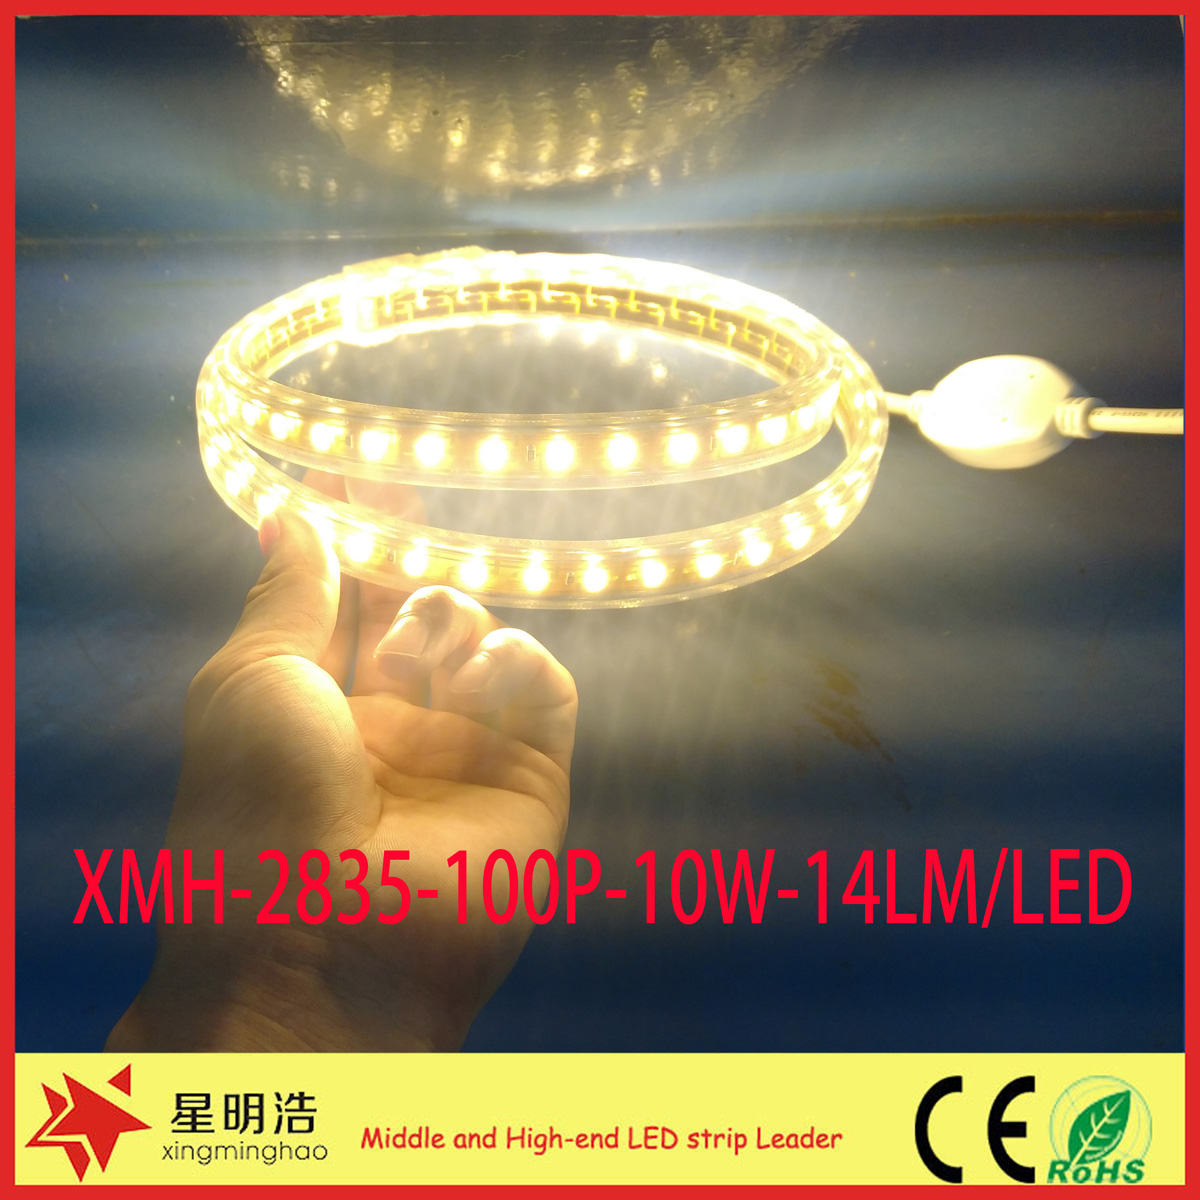 made in china zhongshan wholesales waterproof led strip light